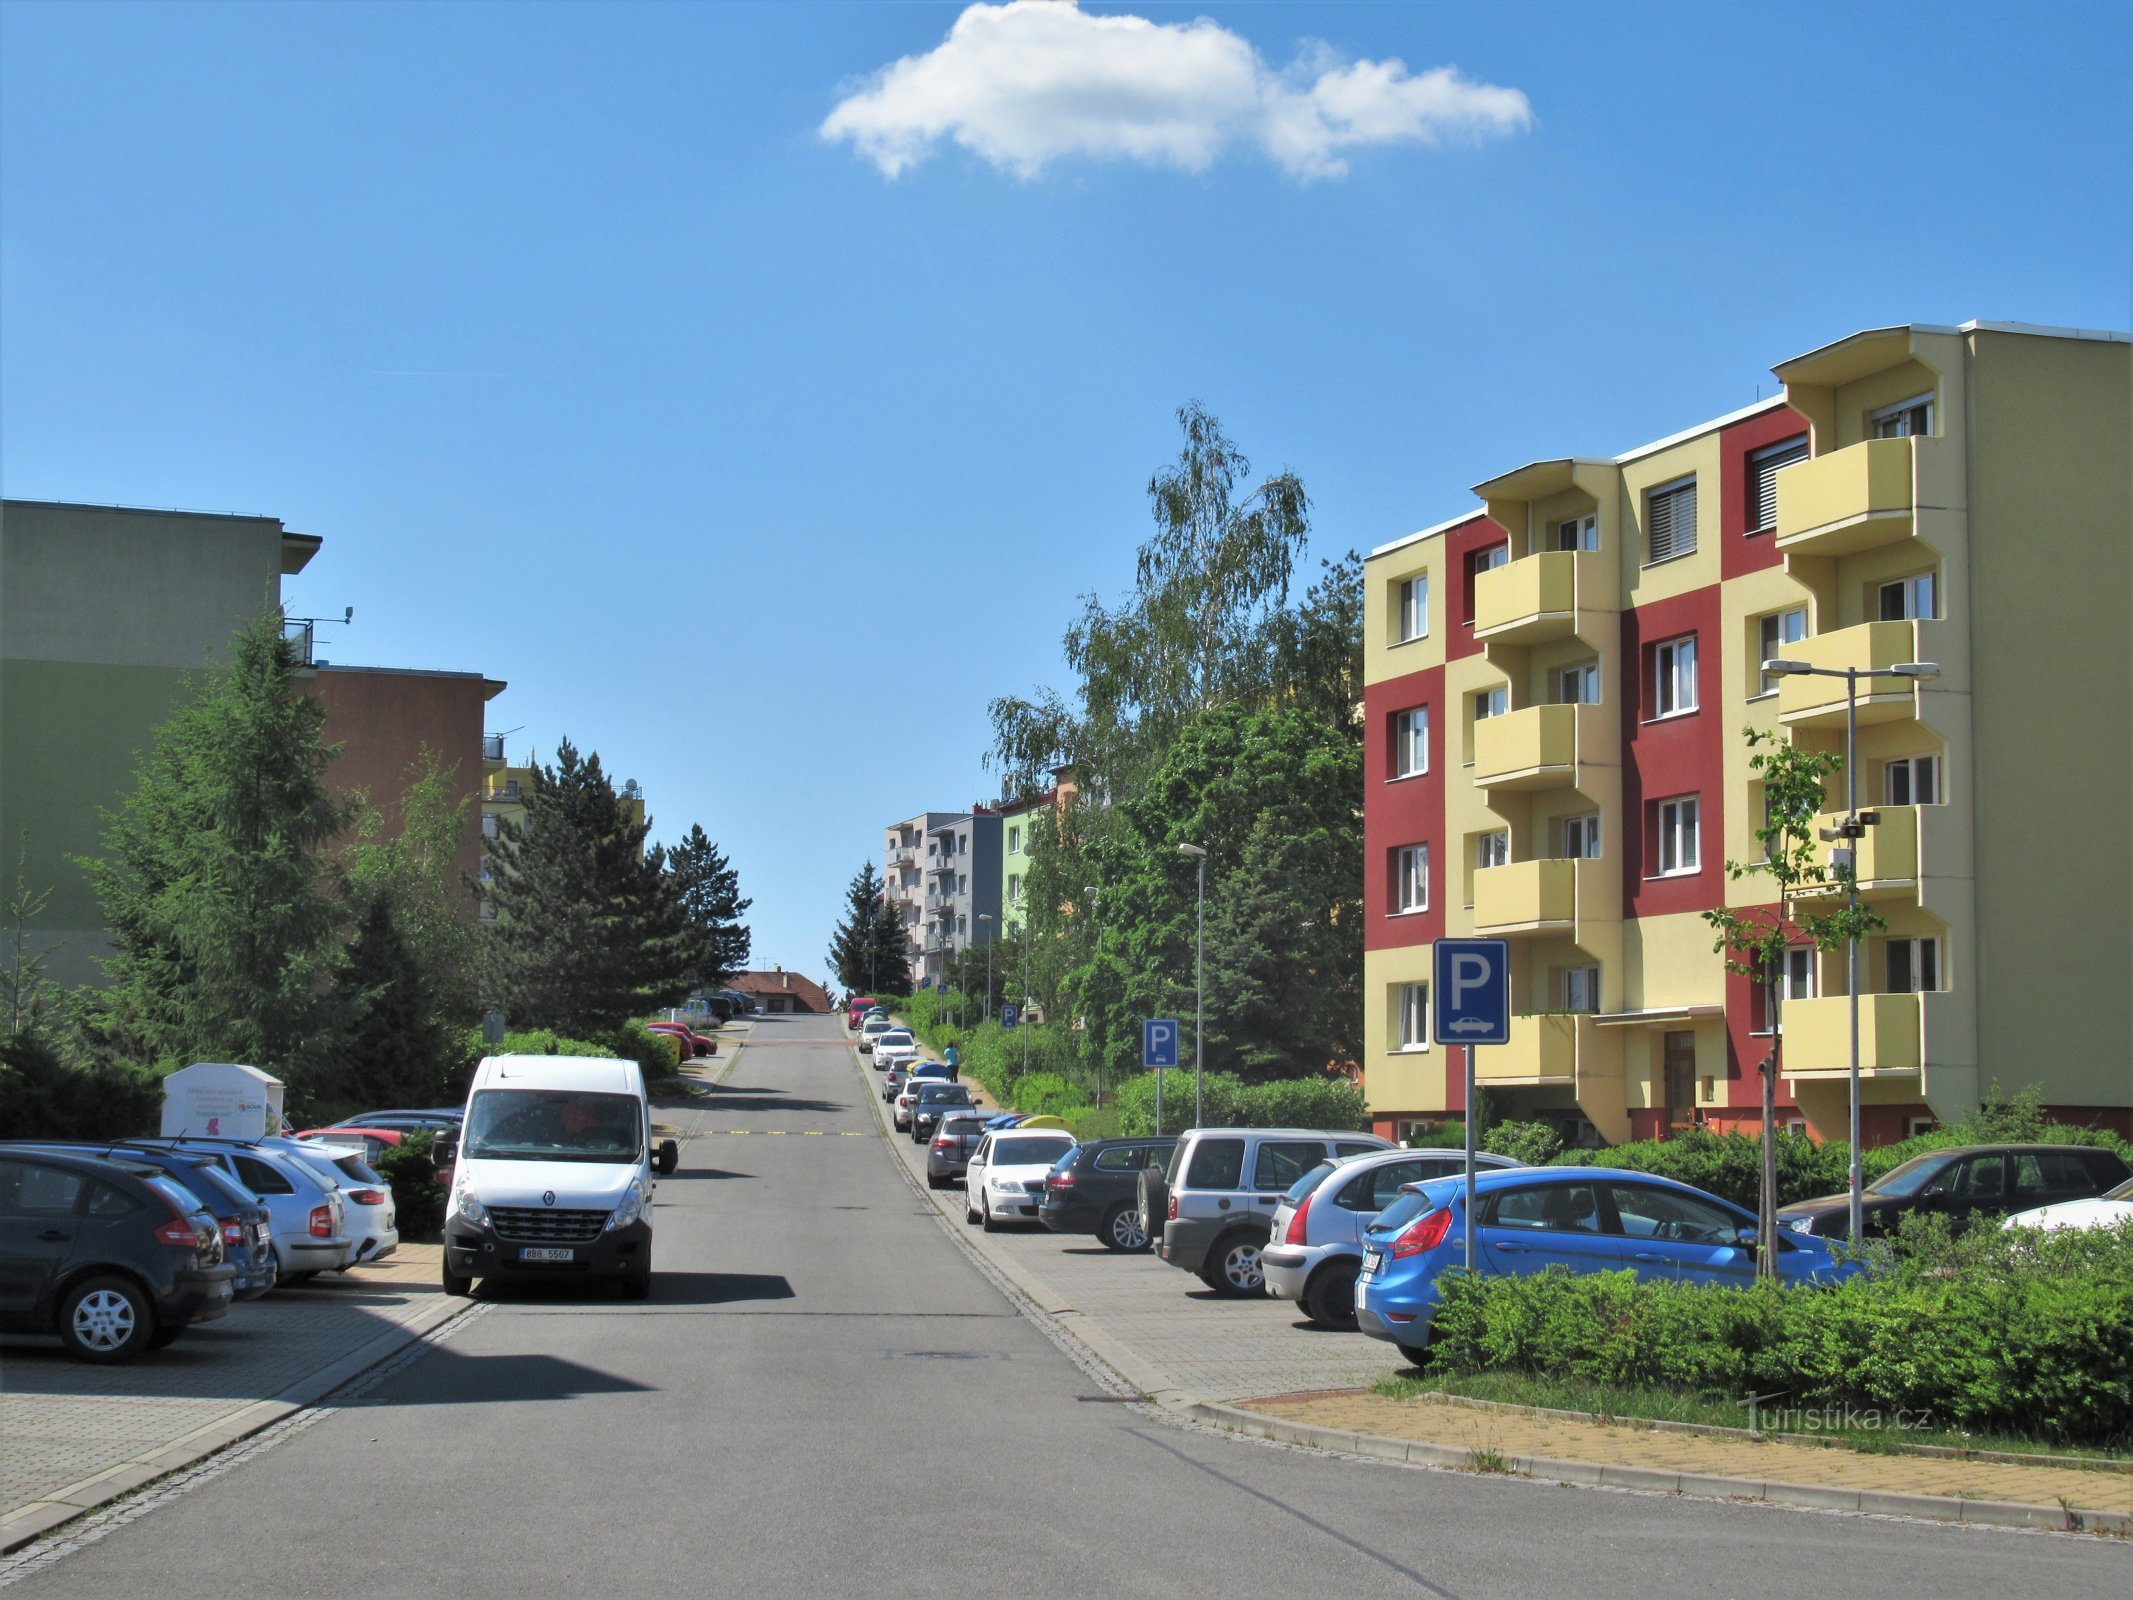 Kopánky straat leidt naar de kruising U koupaliště